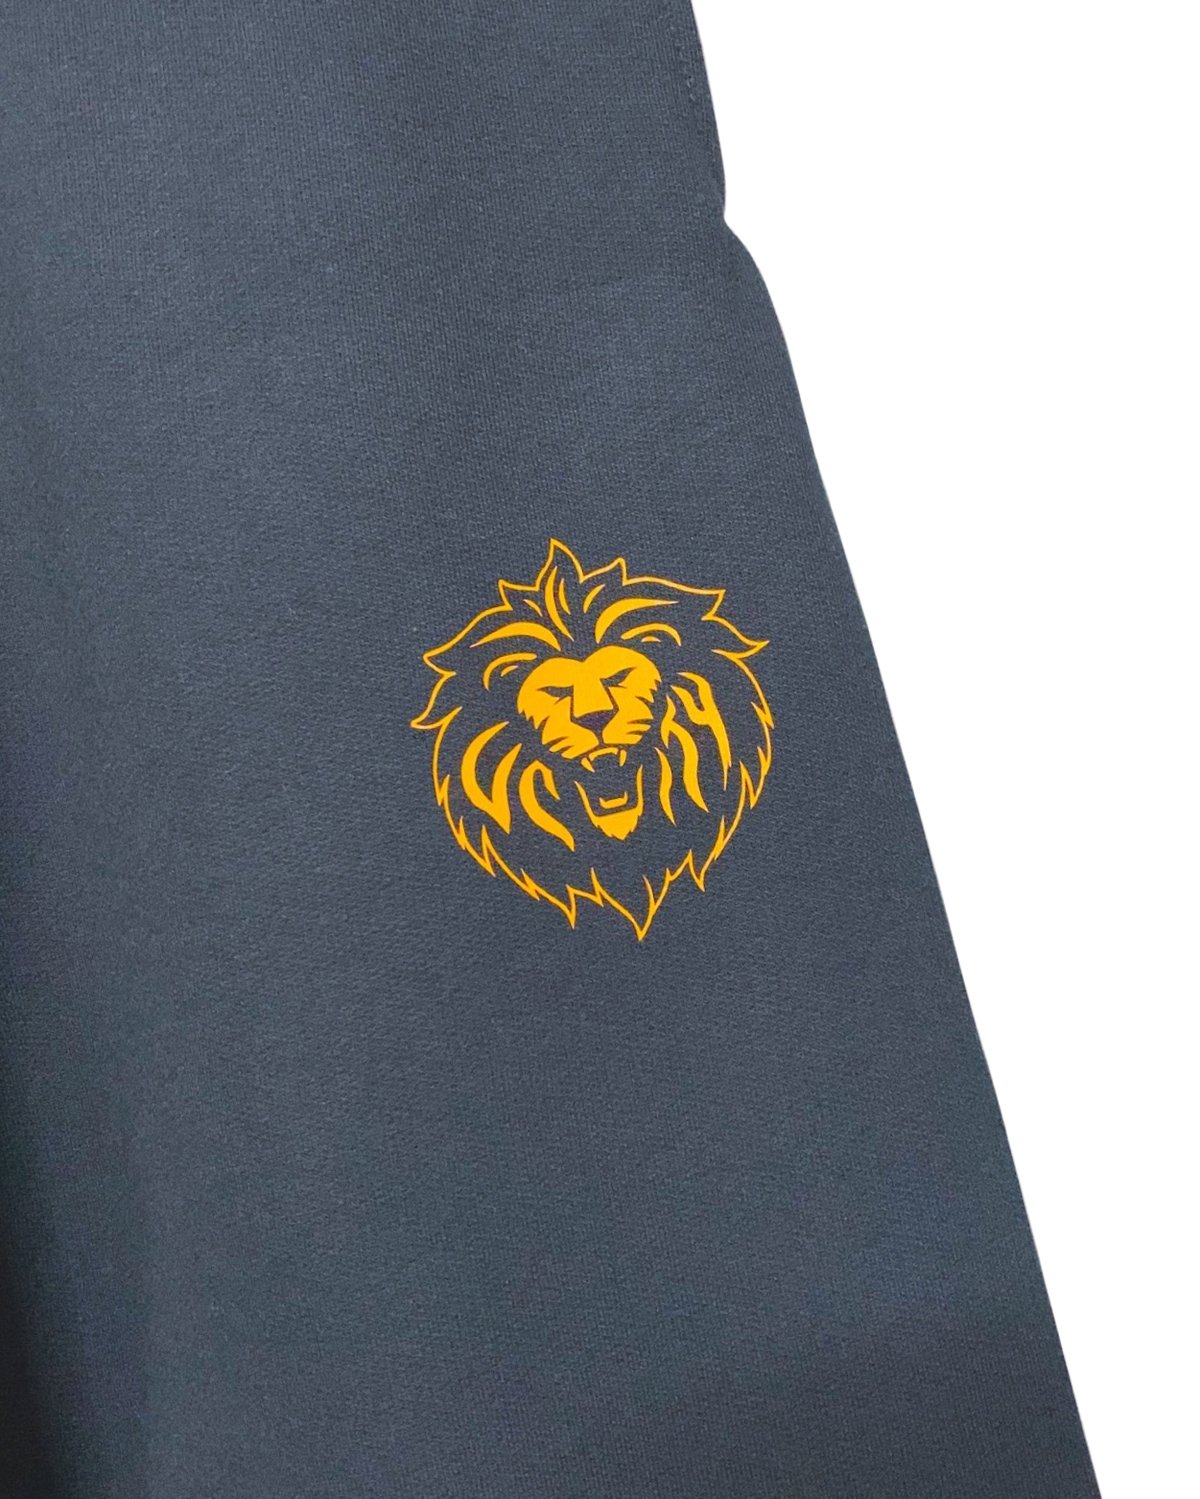 Image of U.City Lions Sweats-Black/Gold